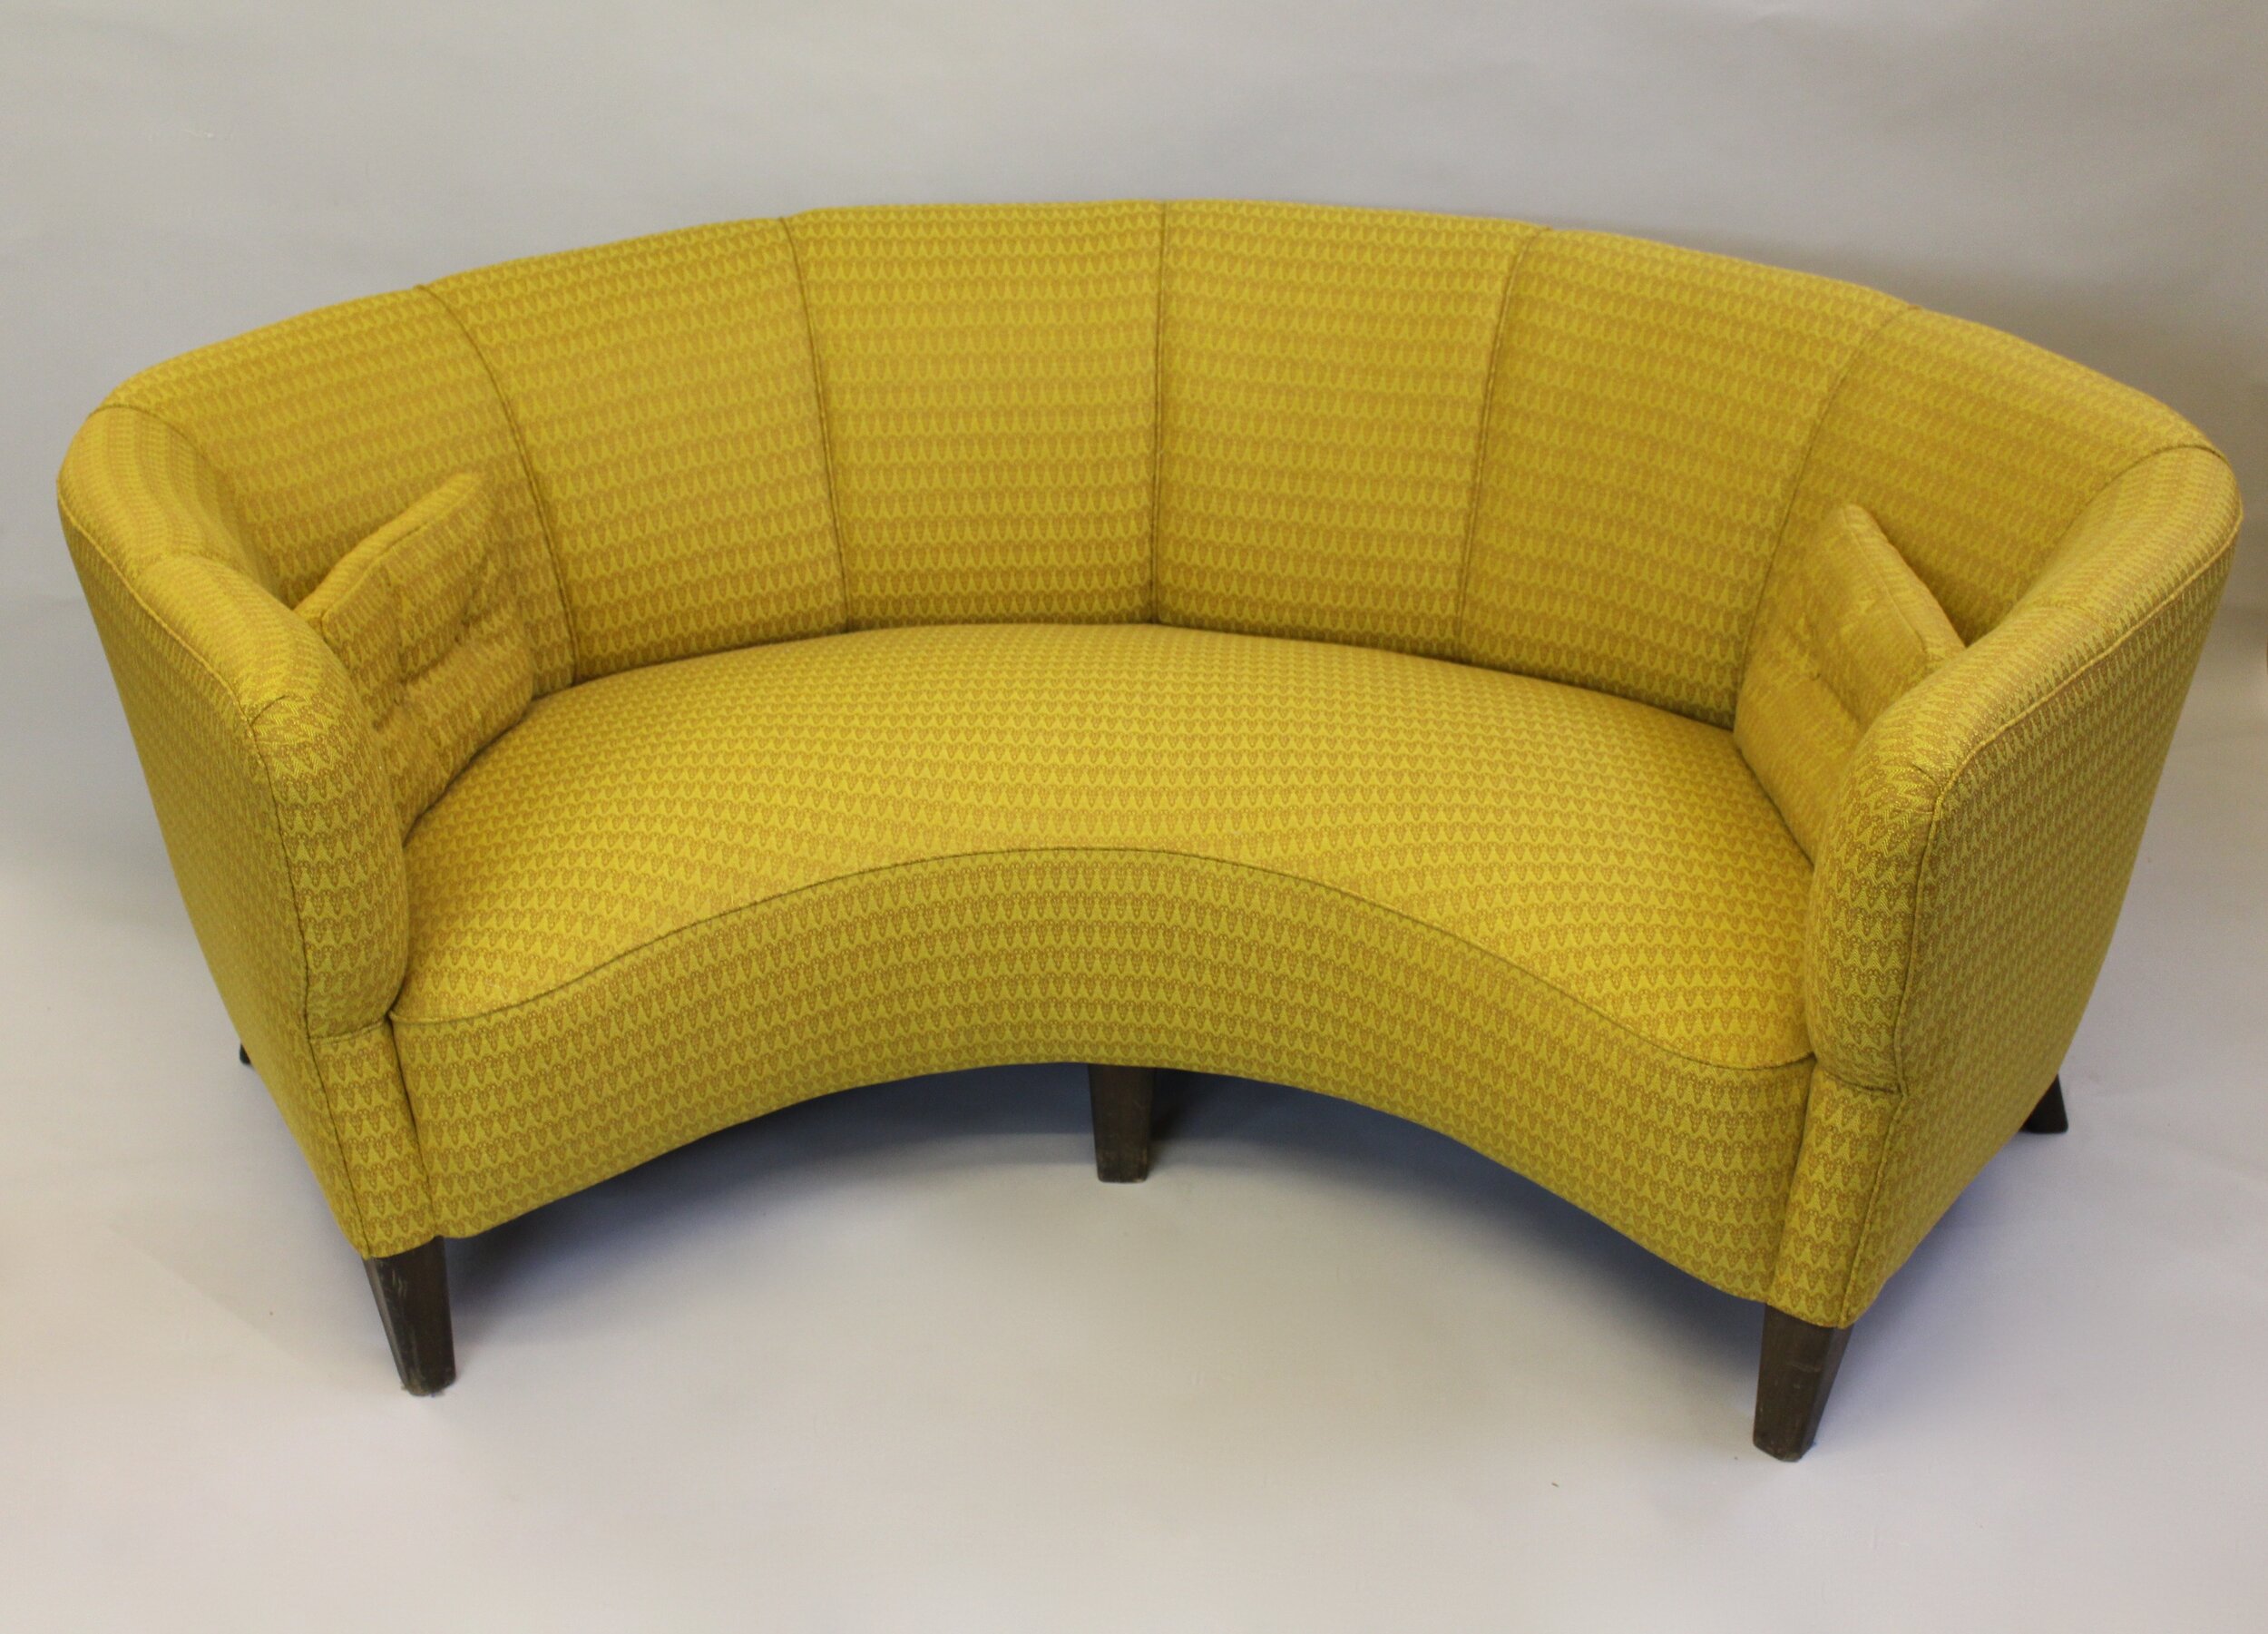 Curved mid-century sofa